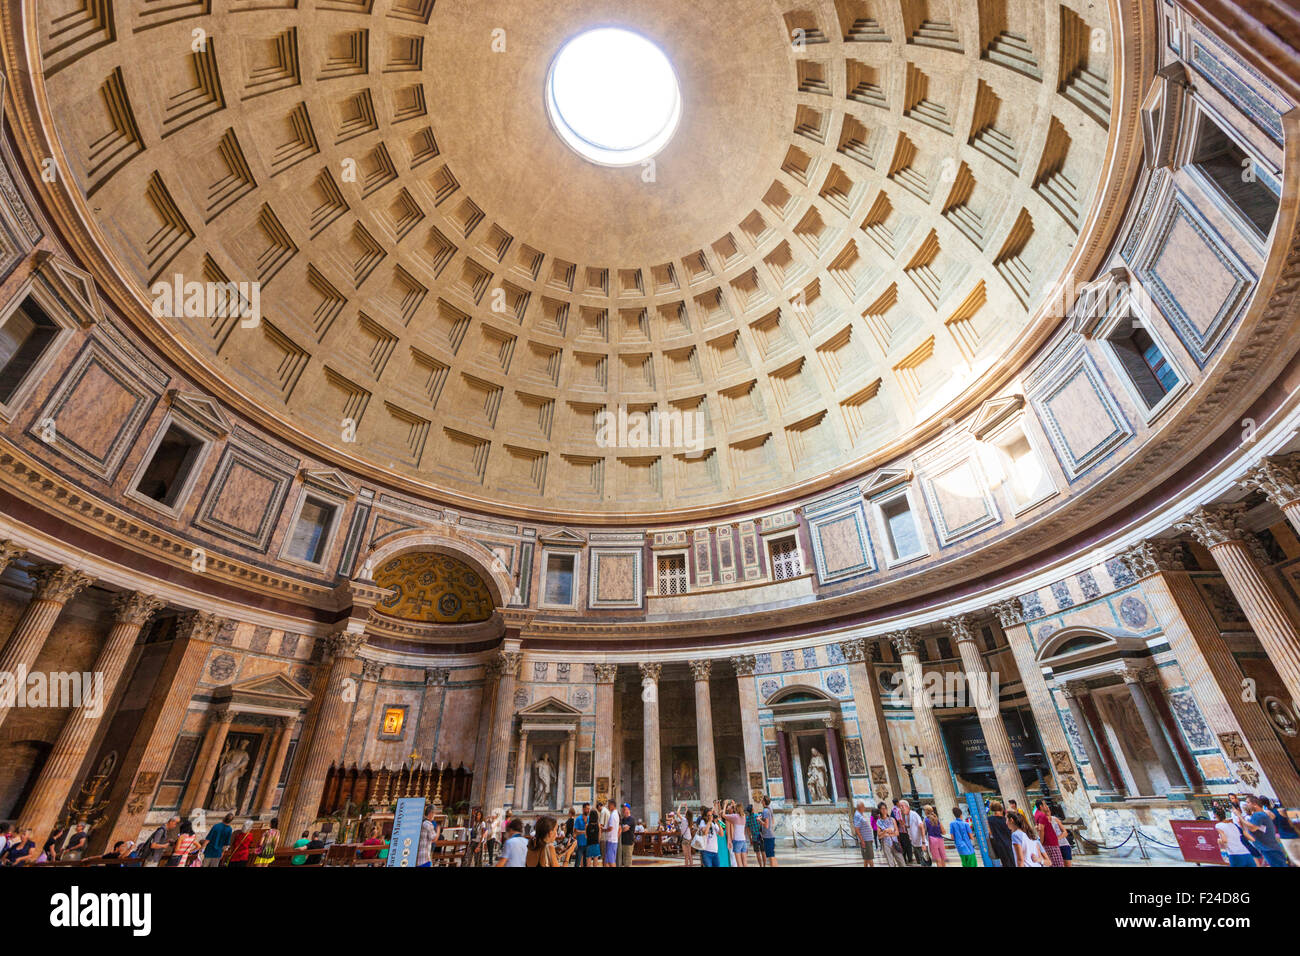 Im Pantheon Tempel der römischen Götter und Kirche Innenraum Platz Piazza della Rotonda Roma Rom Latium Italien EU Europa Stockfoto